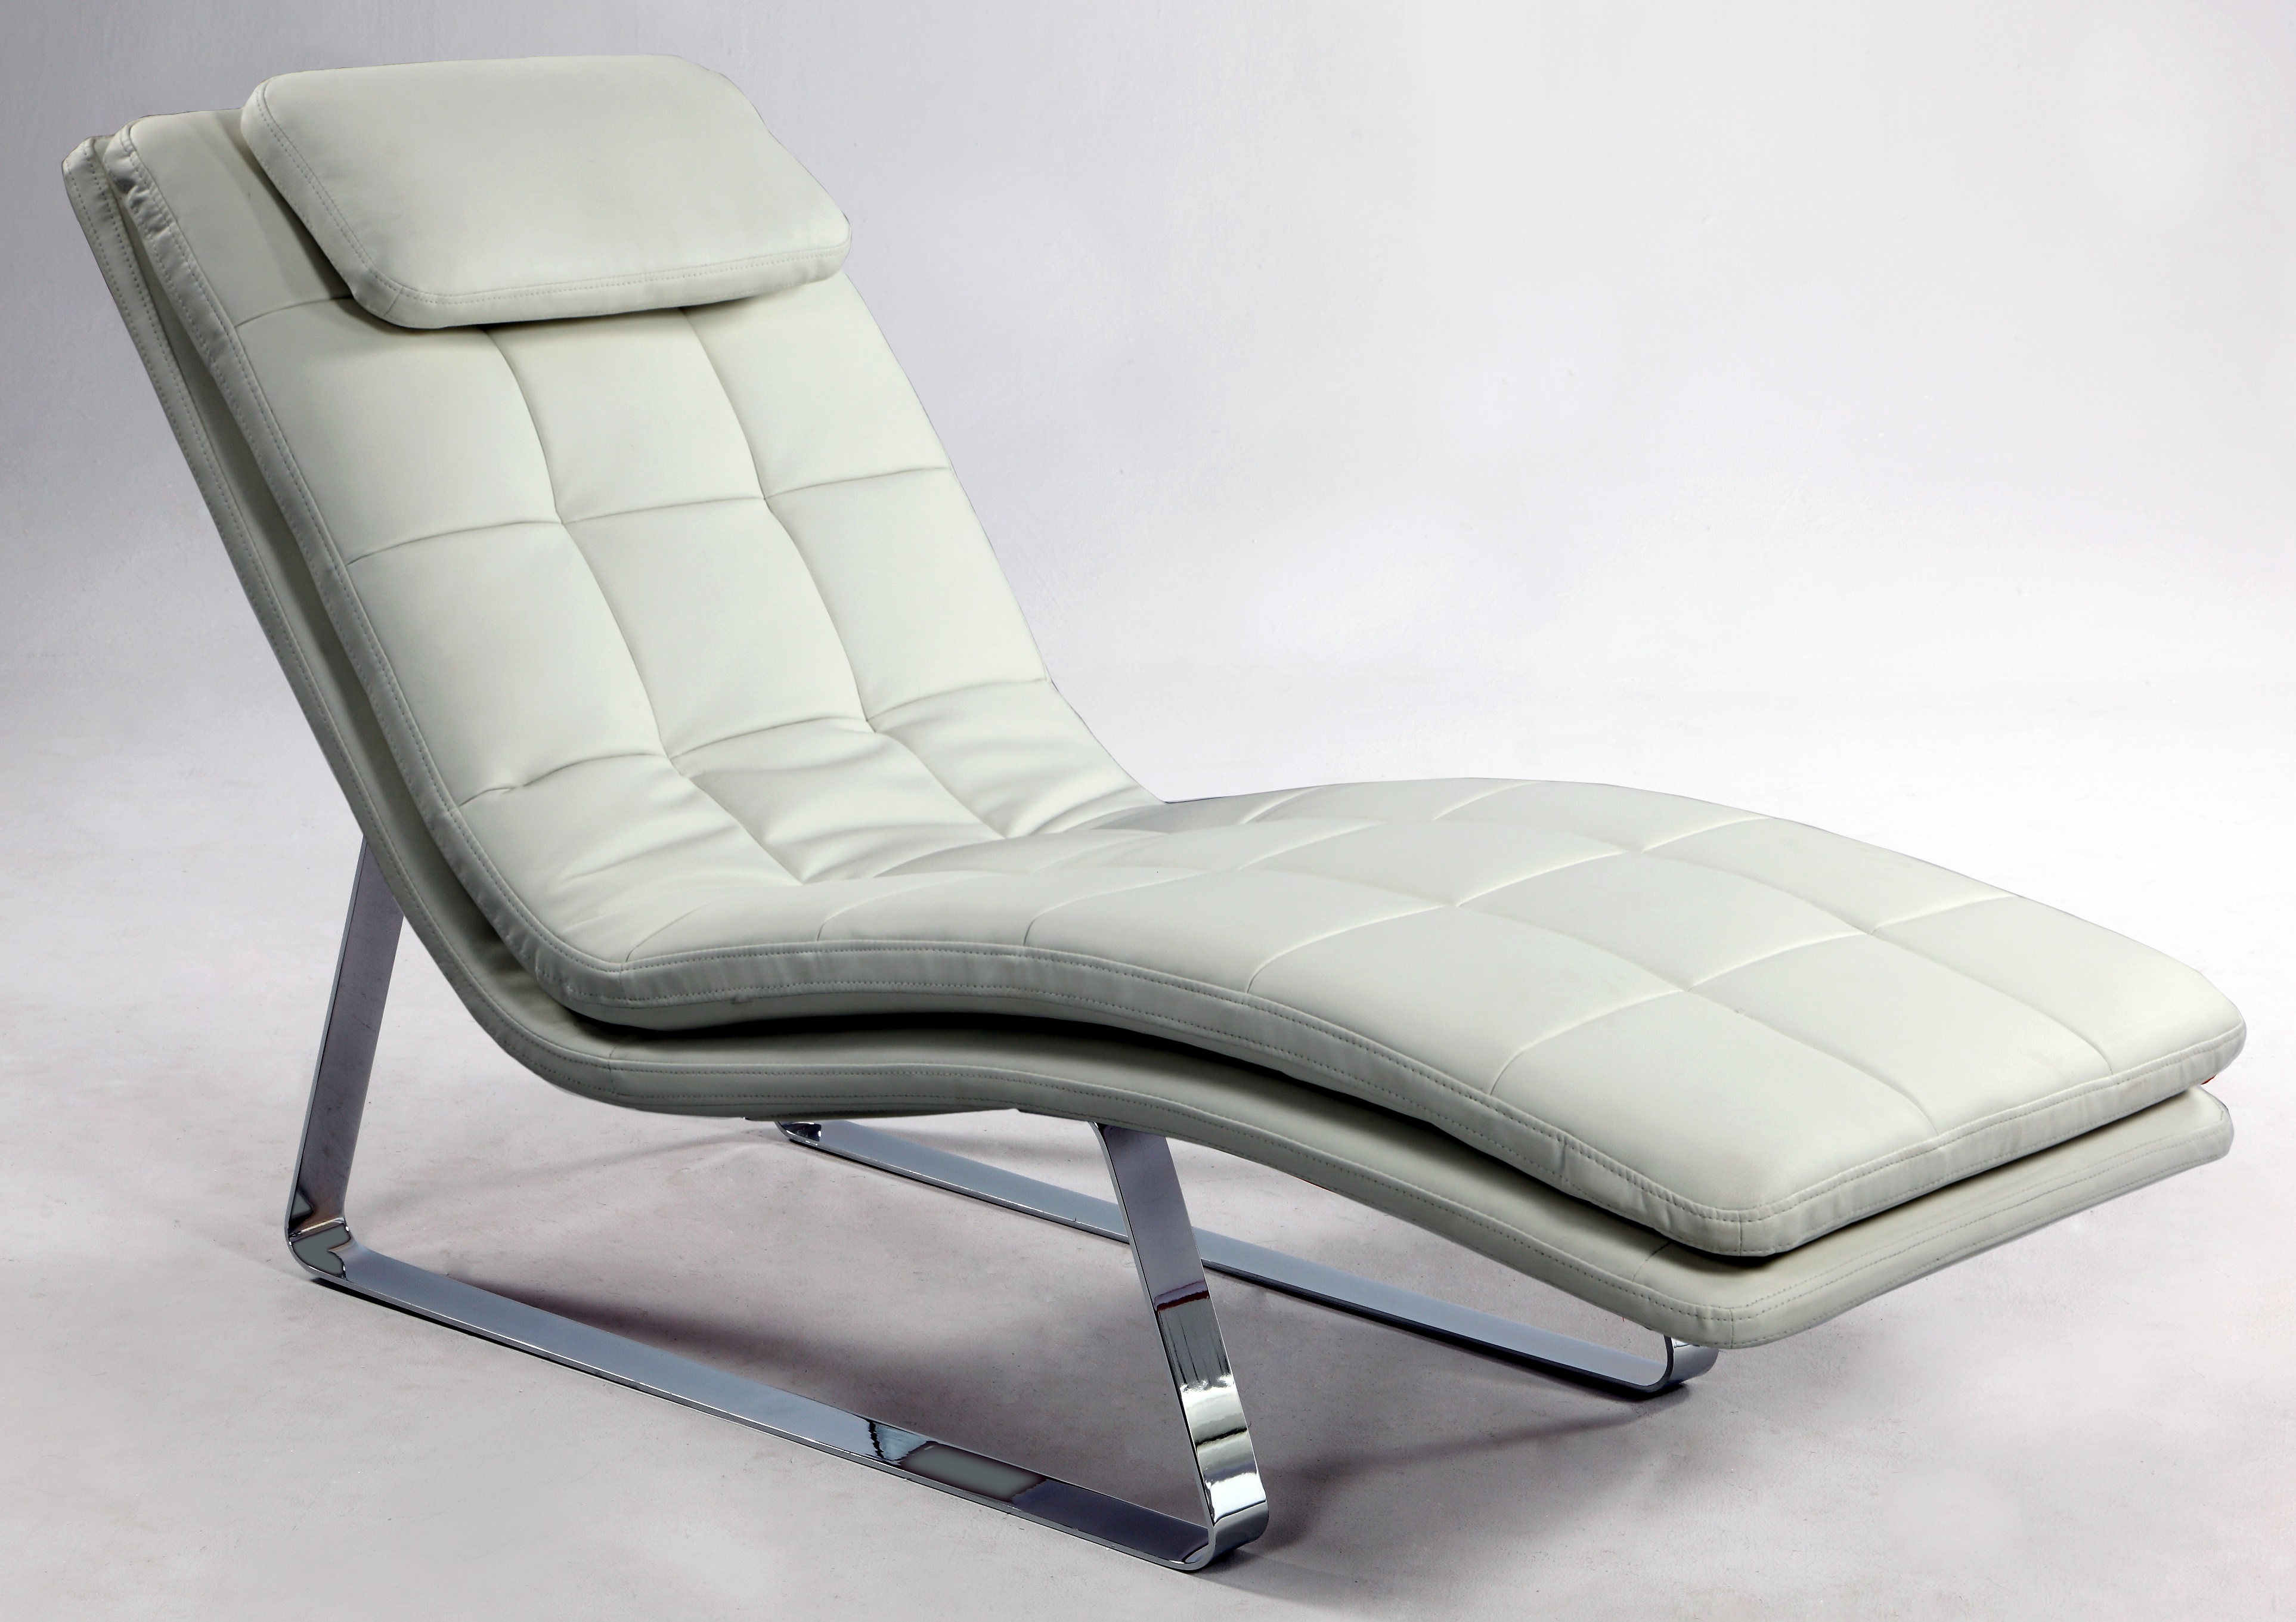 doolhof directory Druppelen Full Bonded Leather Tufted Chaise Lounge With Chrome Legs New York New York  CHCORV